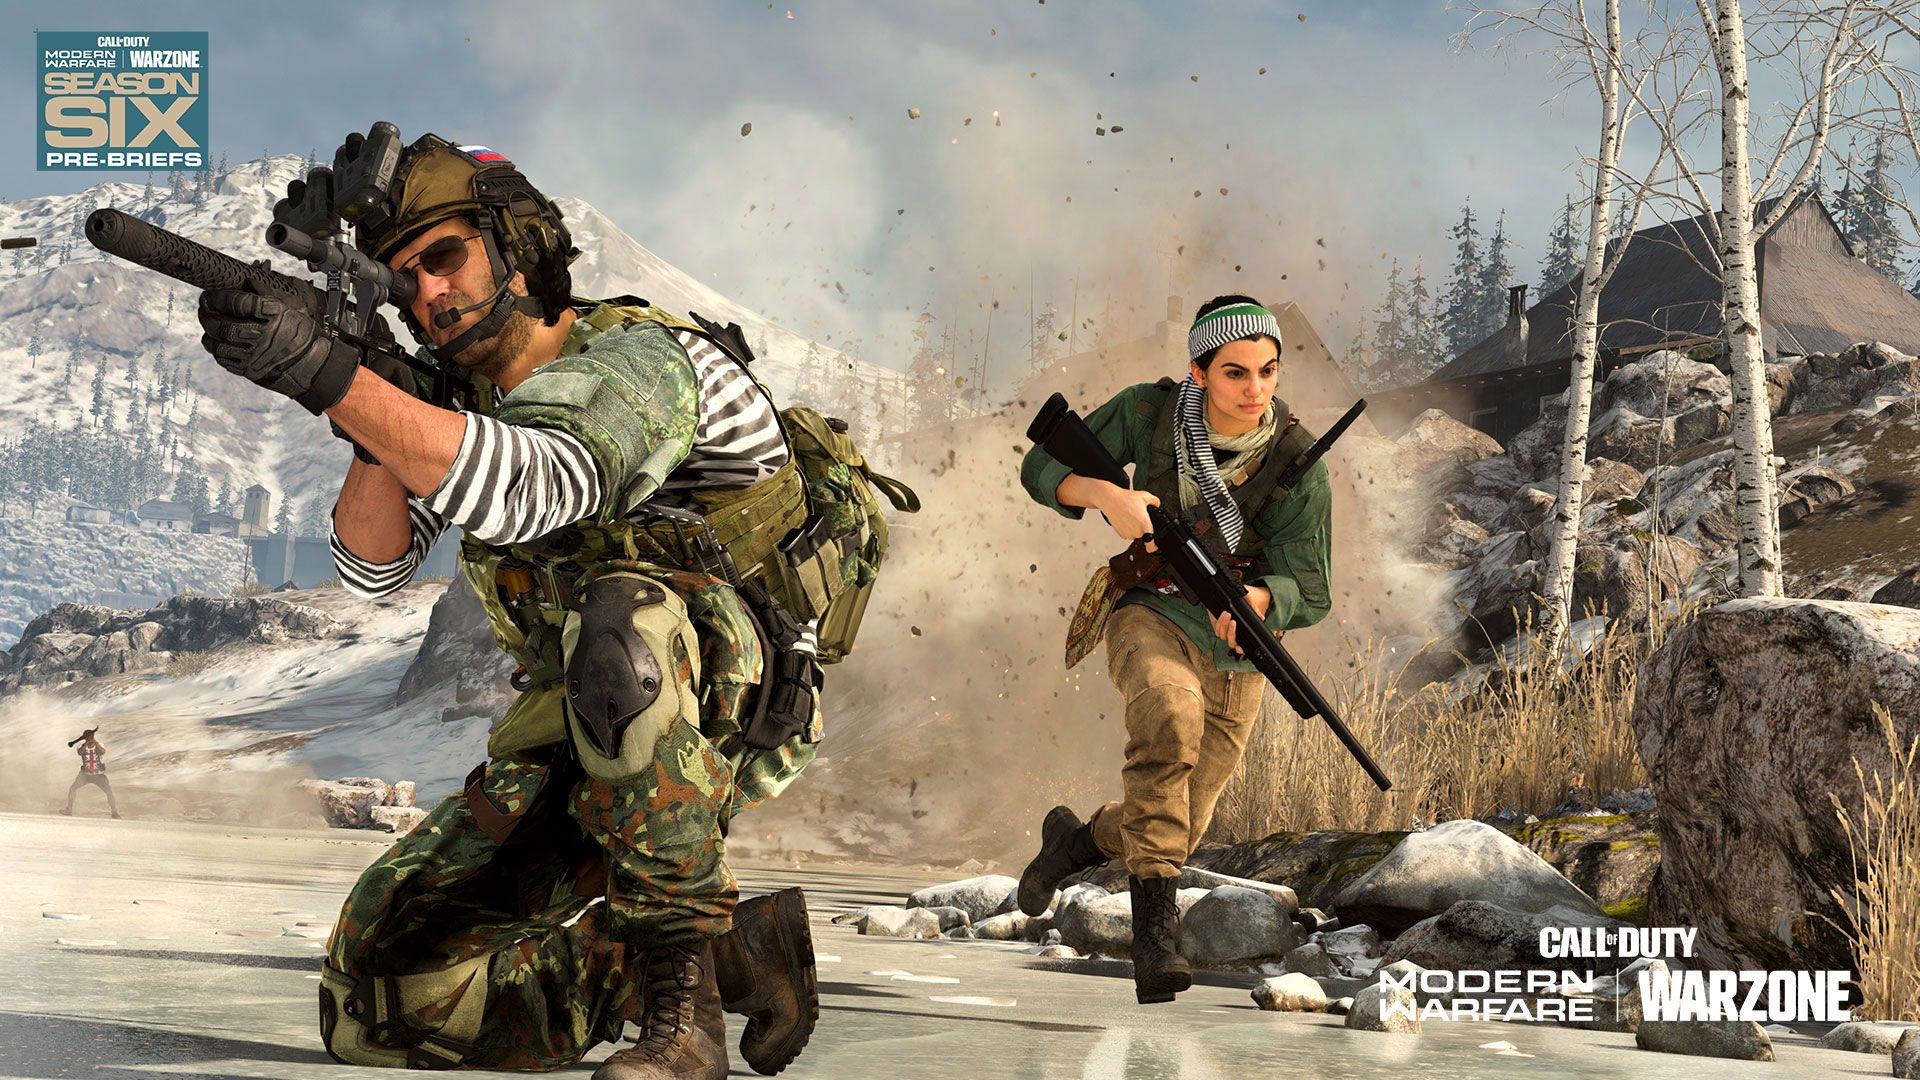 Modern Warfare® Campaign hero Farah and series veteran Nikolai arrive in the Season Six Battle Pass